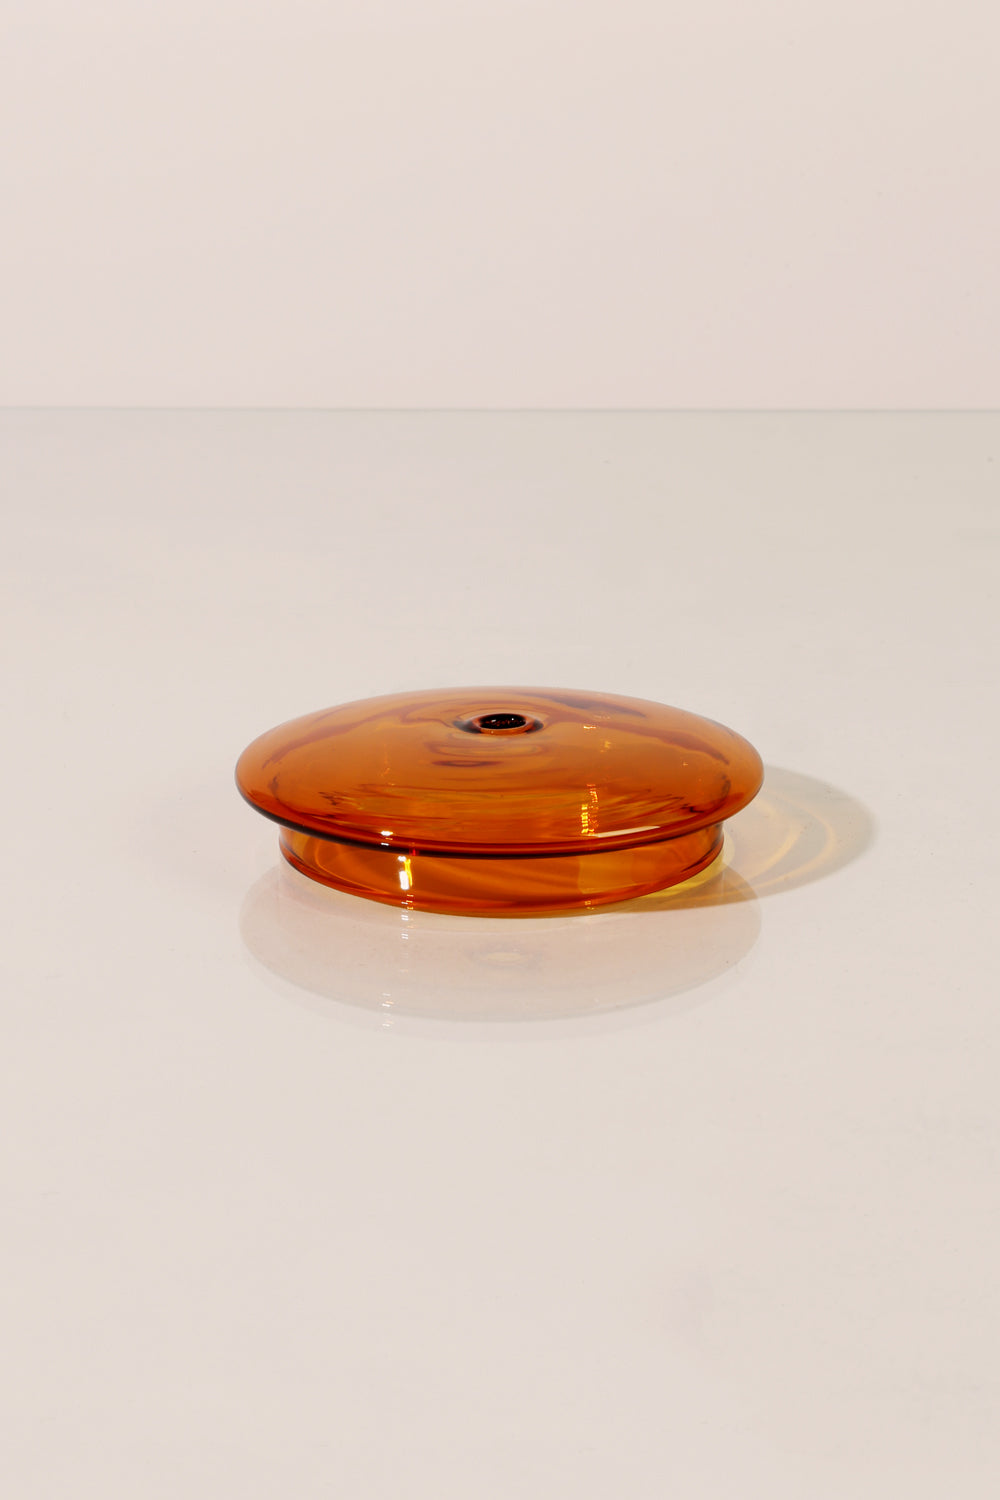 KONA French Press Replacement Glass Kit, Includes Spare Glass Carafe W –  Idylc Homes KONA